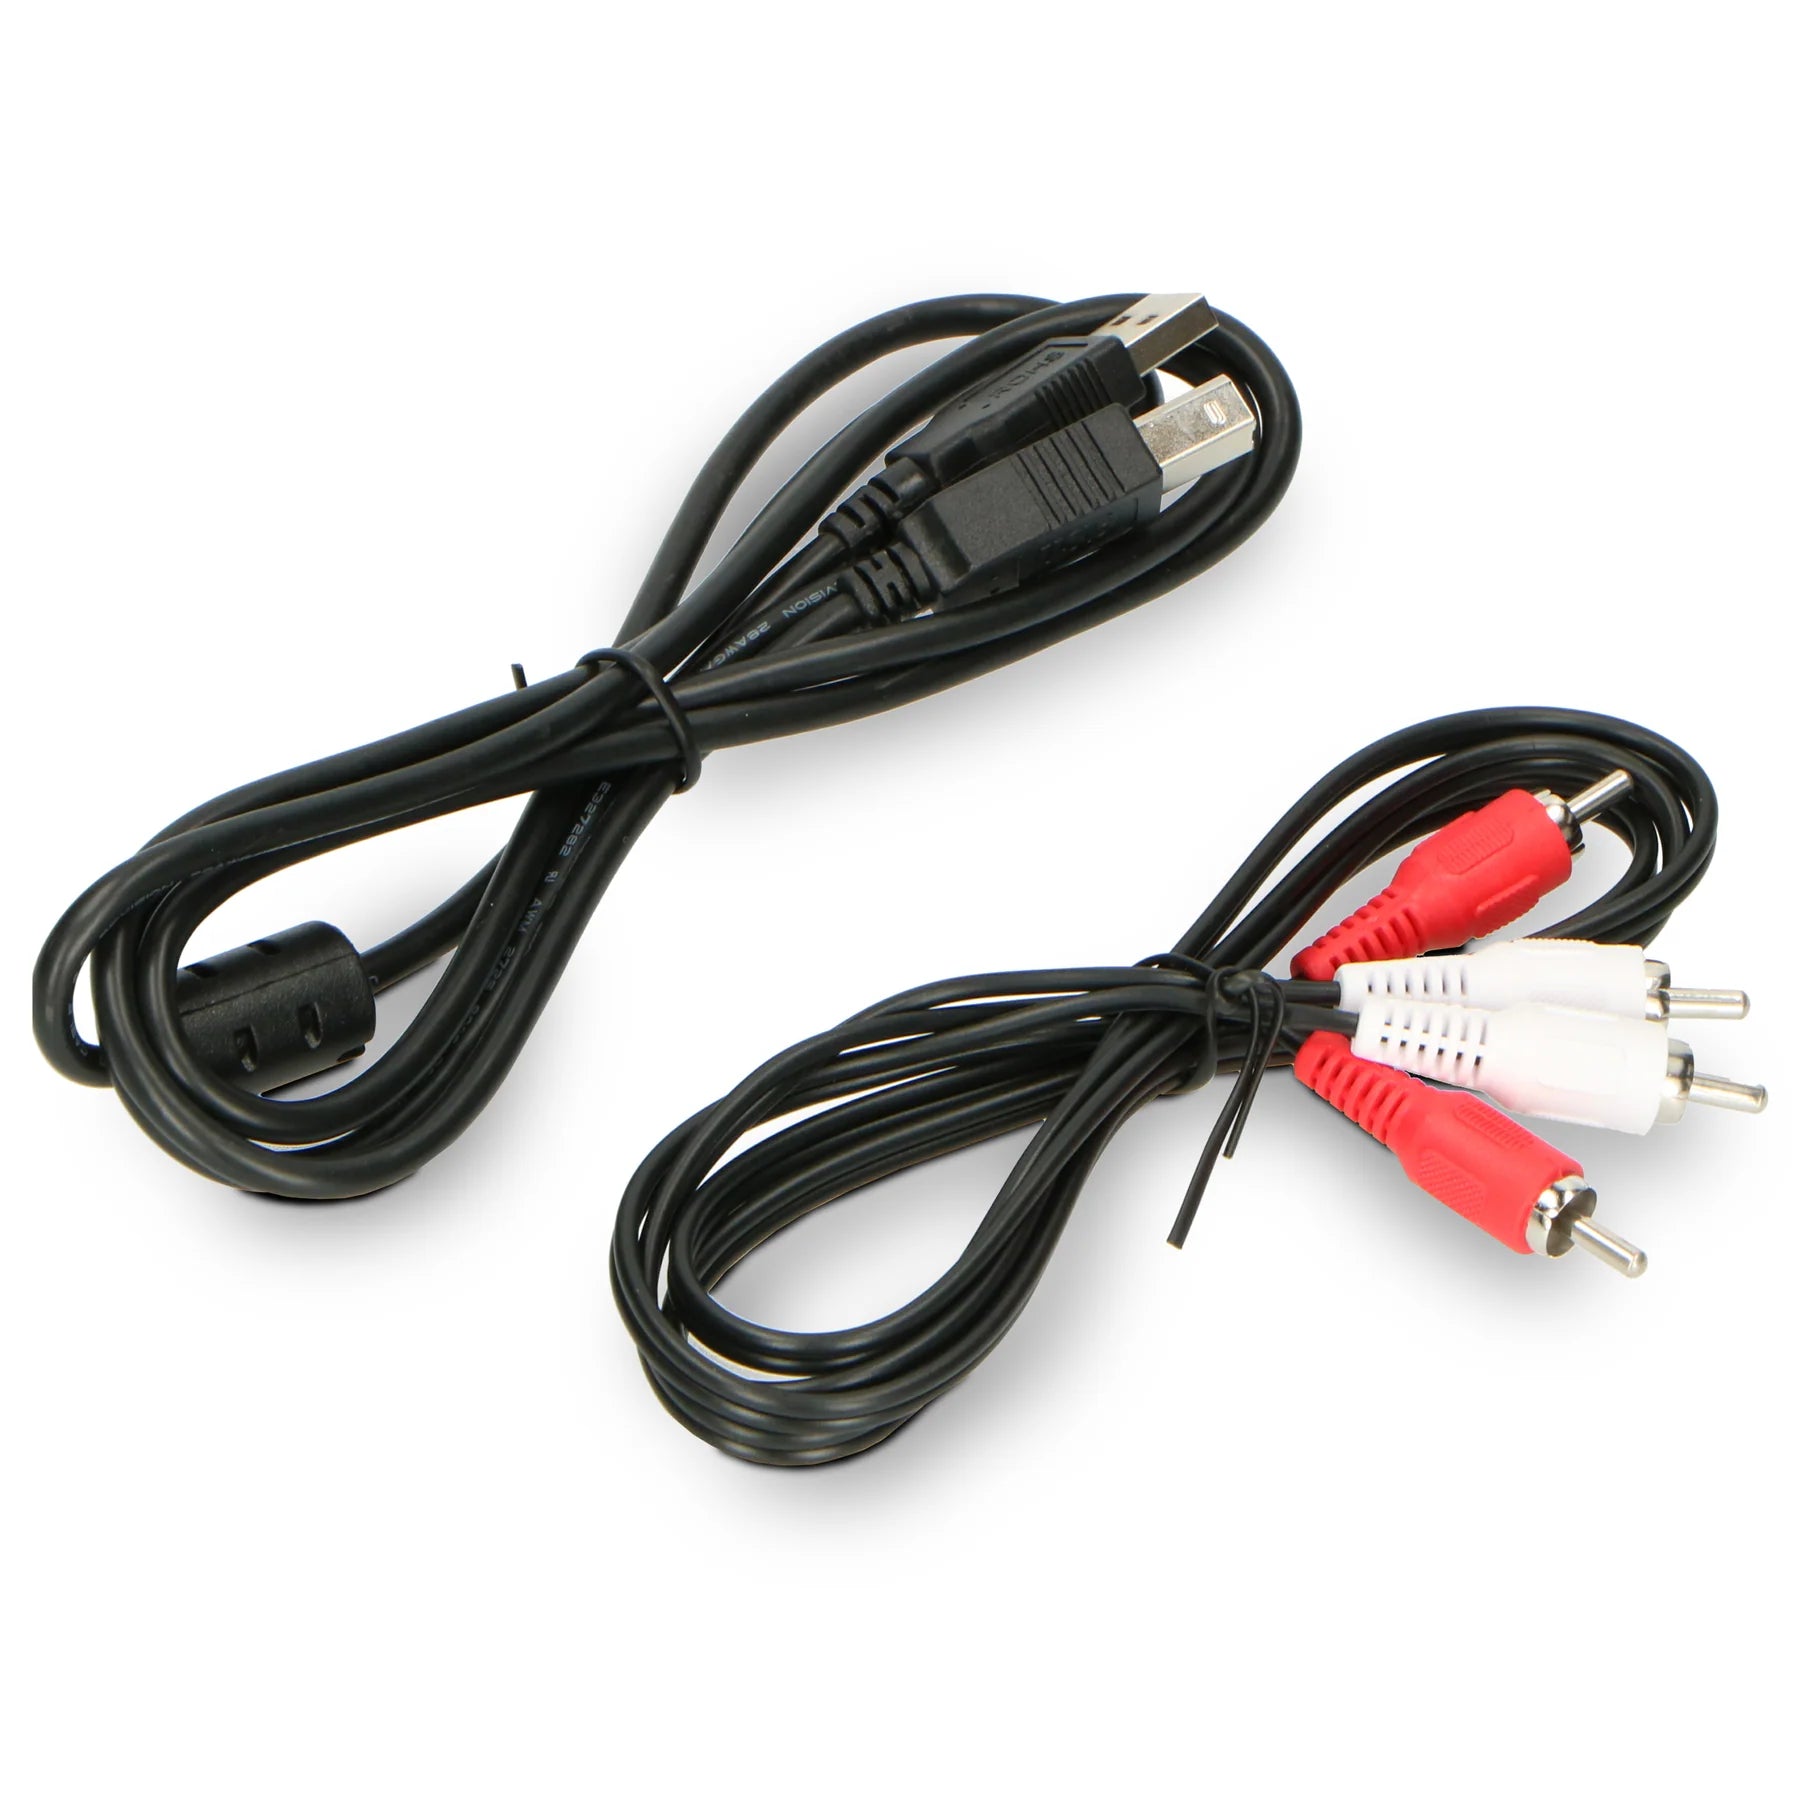 Tornamesa Lenco L-30 Black USBPC Capsula Audio-Technica AT3600